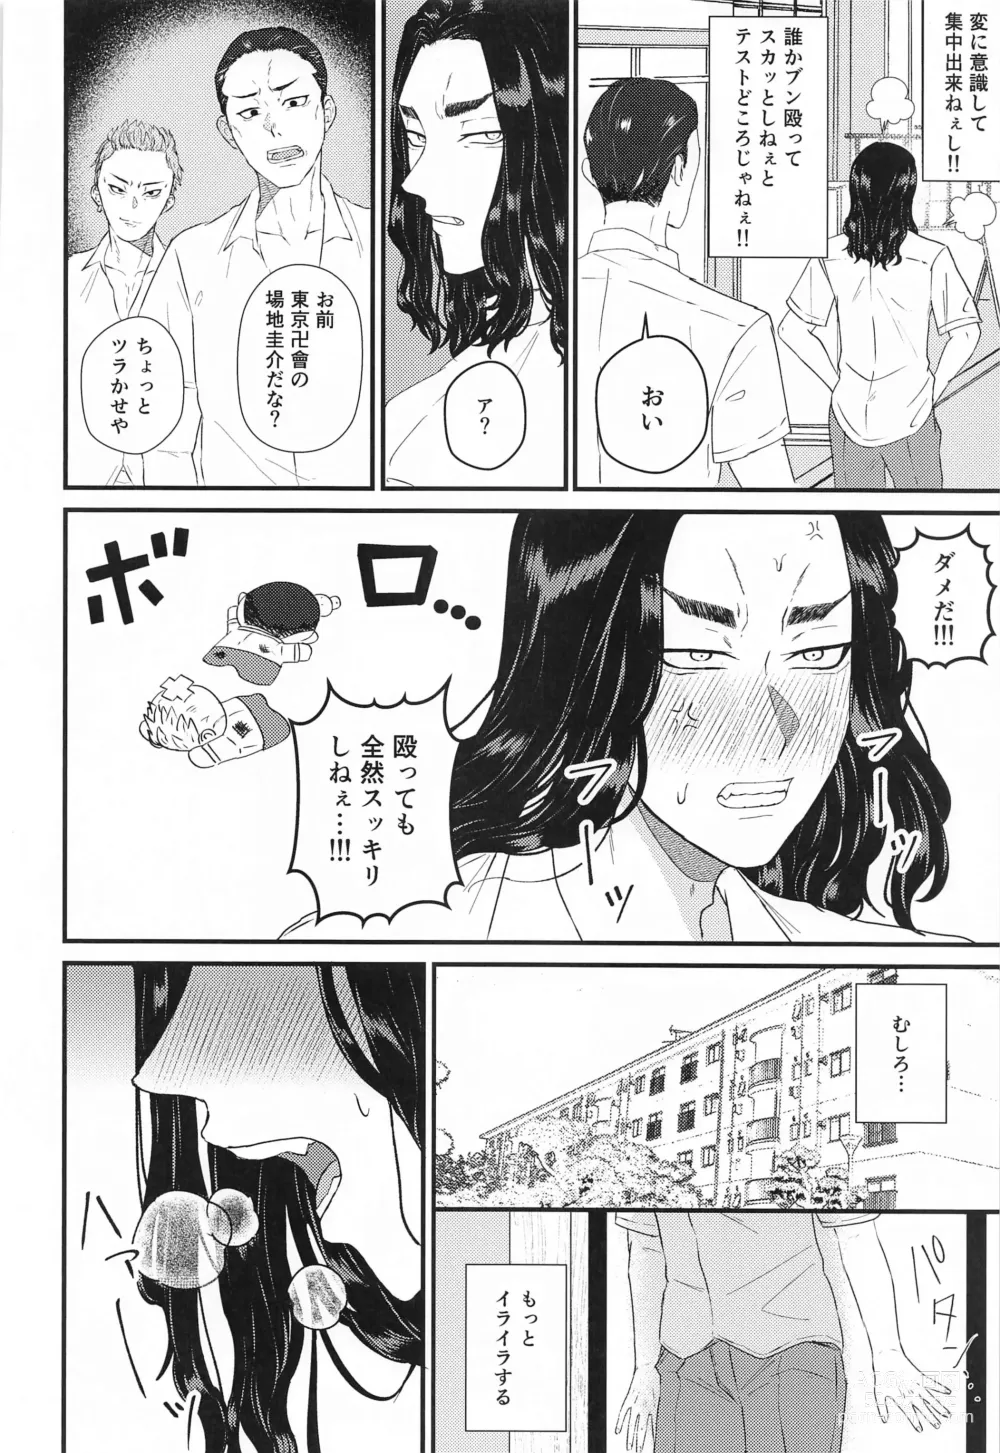 Page 11 of doujinshi Futari no Maruhi  Test Hisshouhou